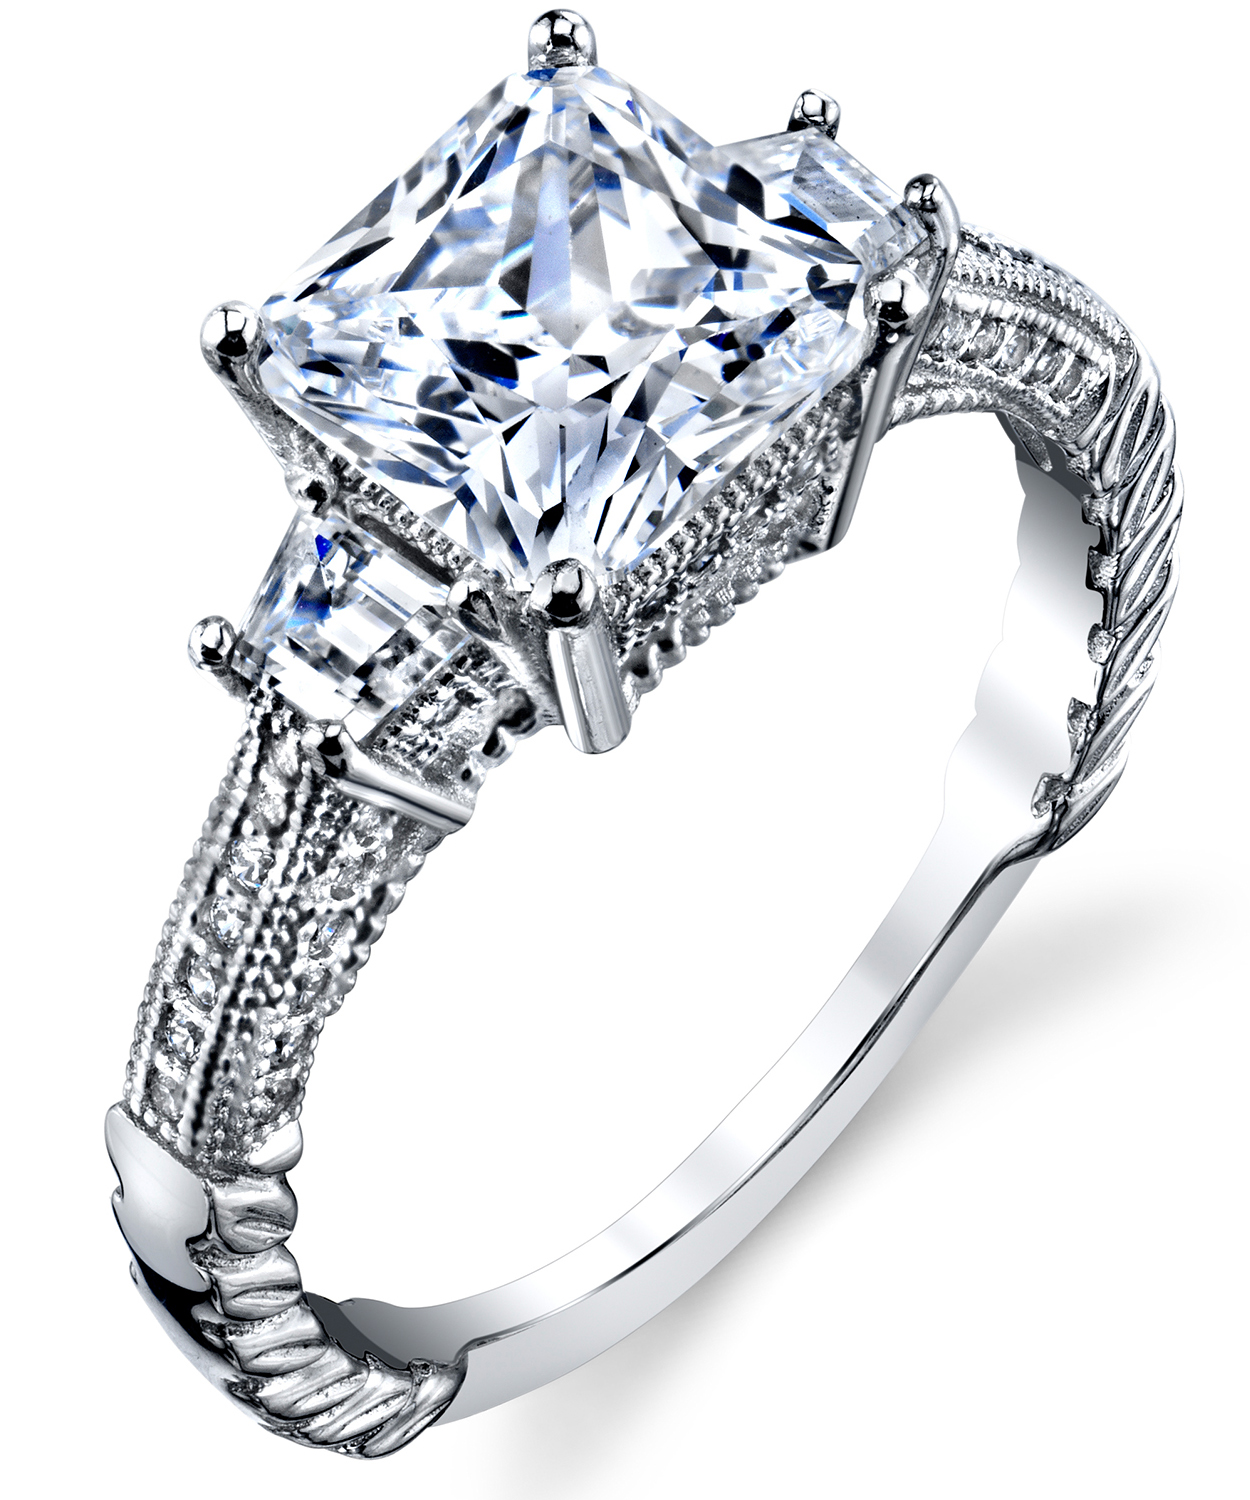 with zirconia all aroundvintage ringwedding ringzirconia ring Sterling silver ring-wedding band